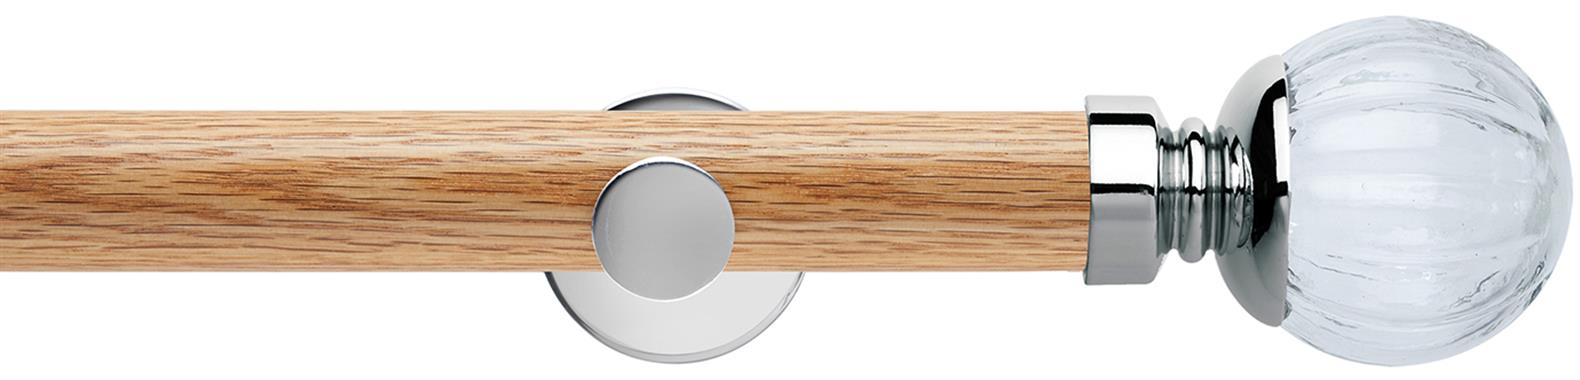 Neo 28mm Oak Wood Eyelet Pole, Chrome, Clear Pumpkin Ball